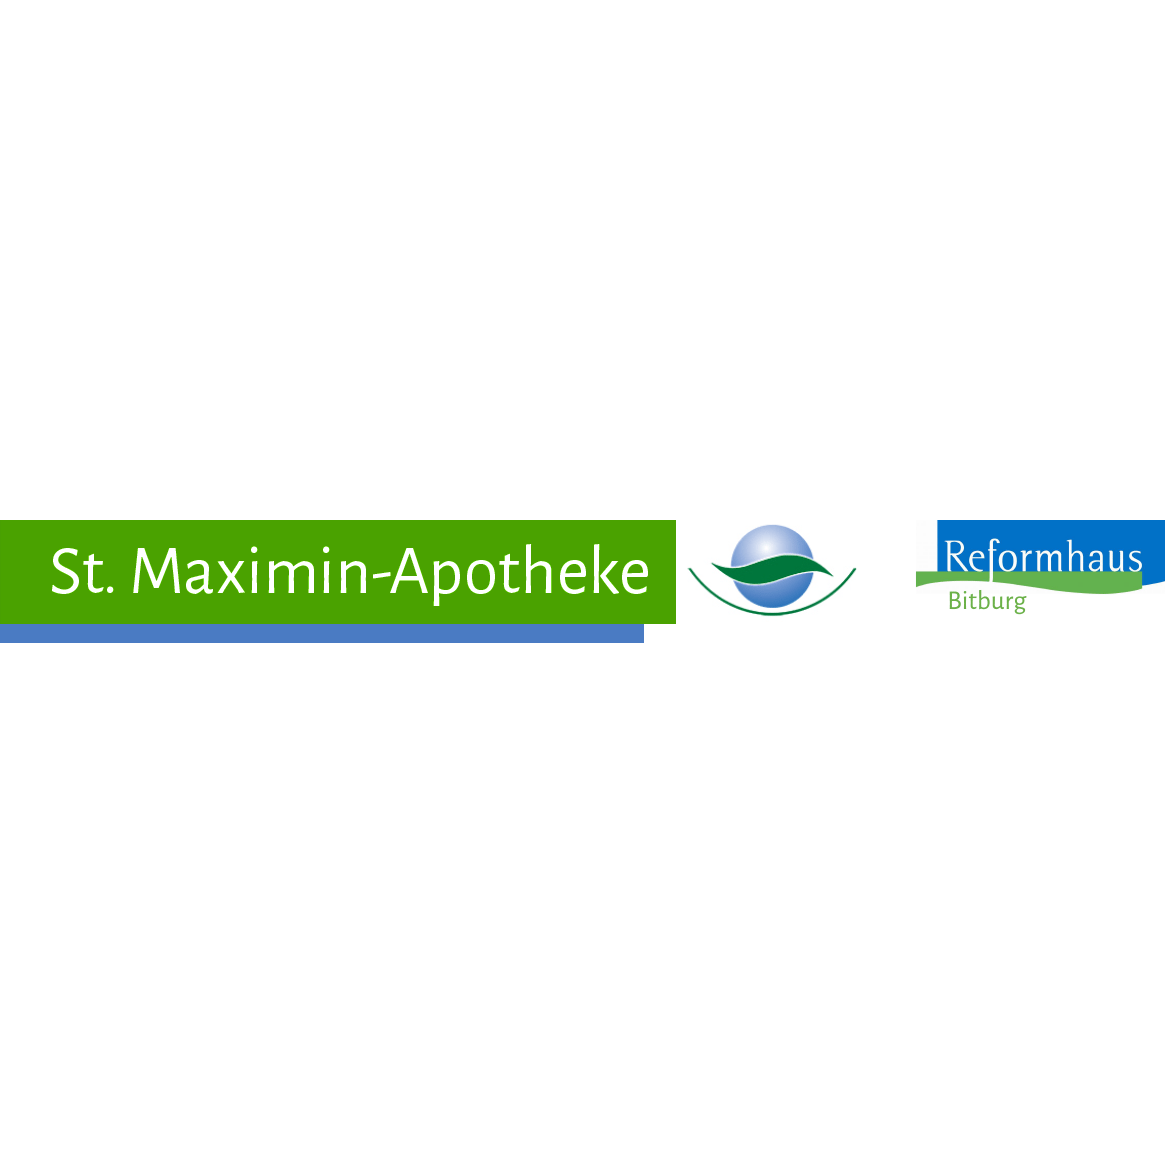 St. Maximin-Apotheke in Bitburg - Logo